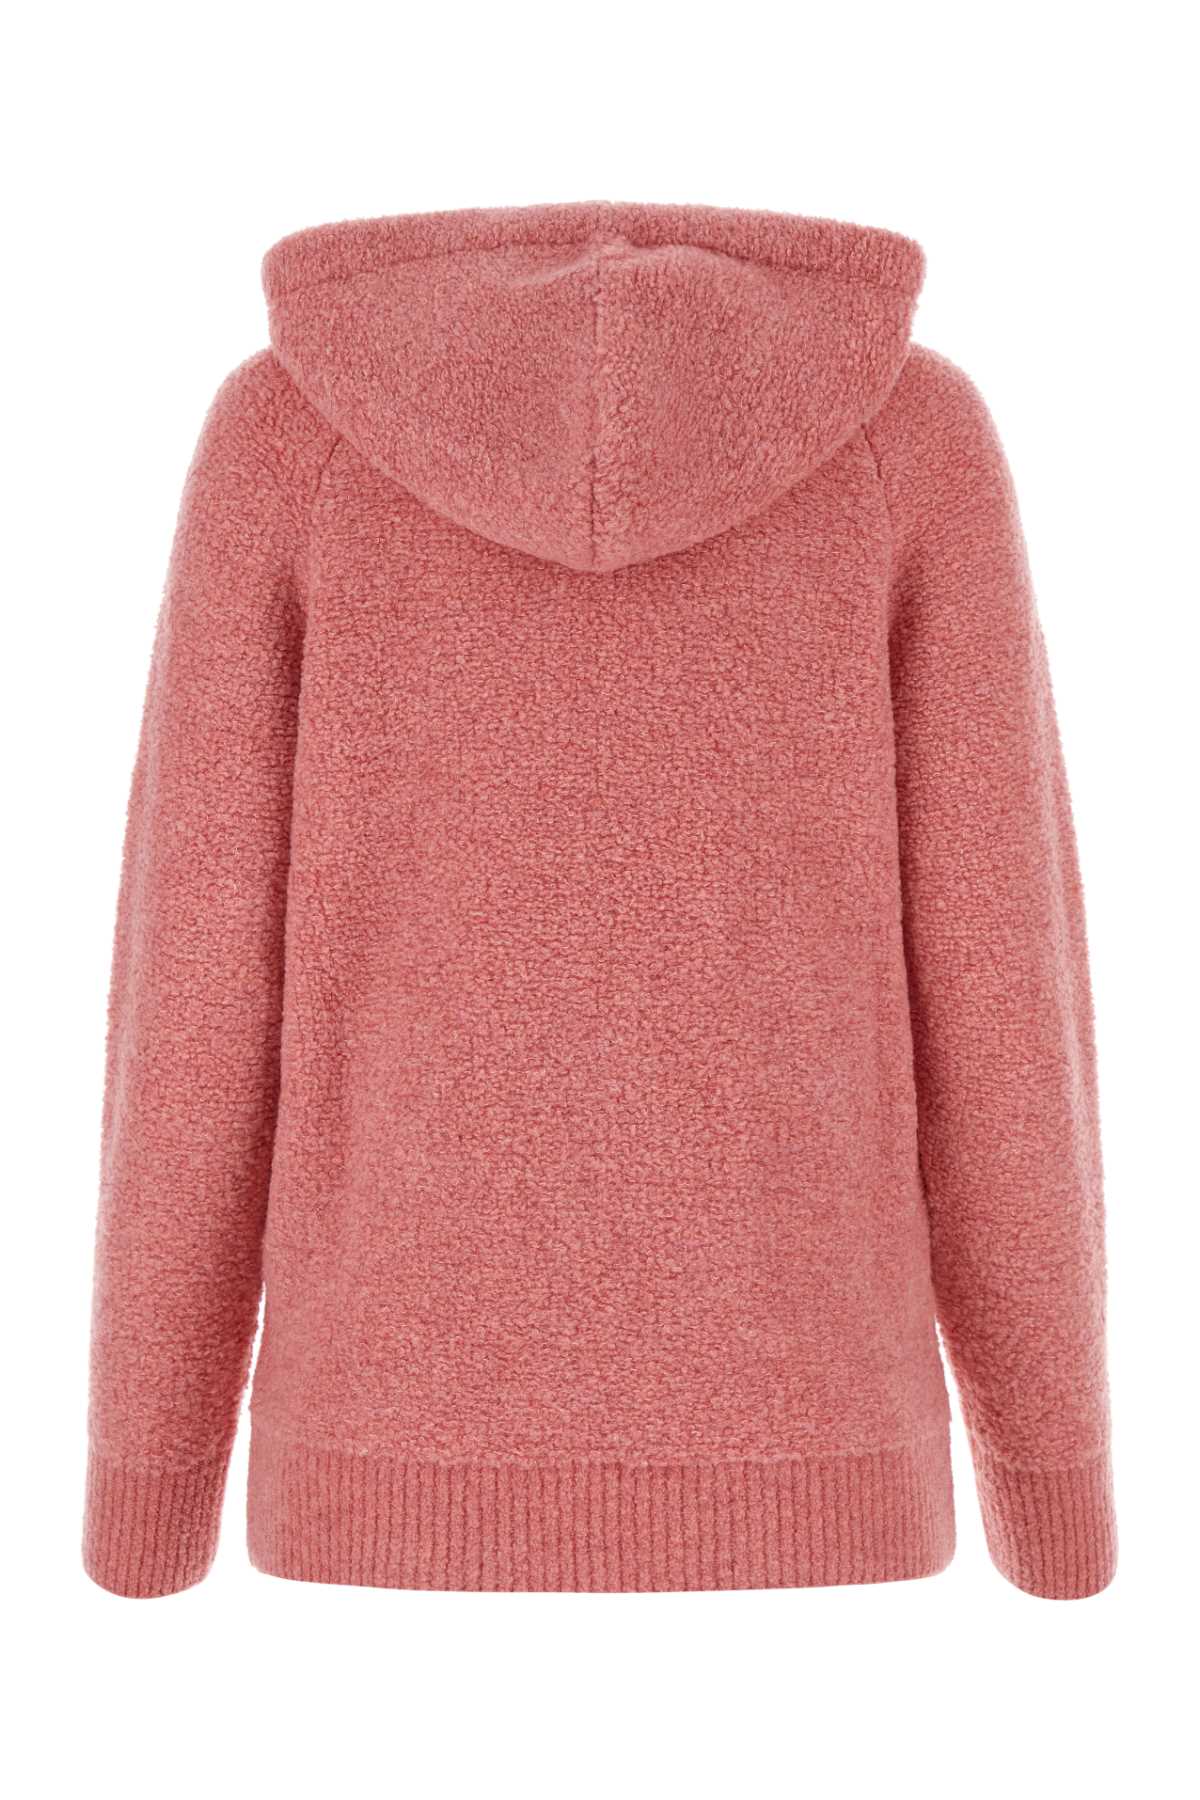 Gucci Pink Teddy Sweatshirt In Rosemix